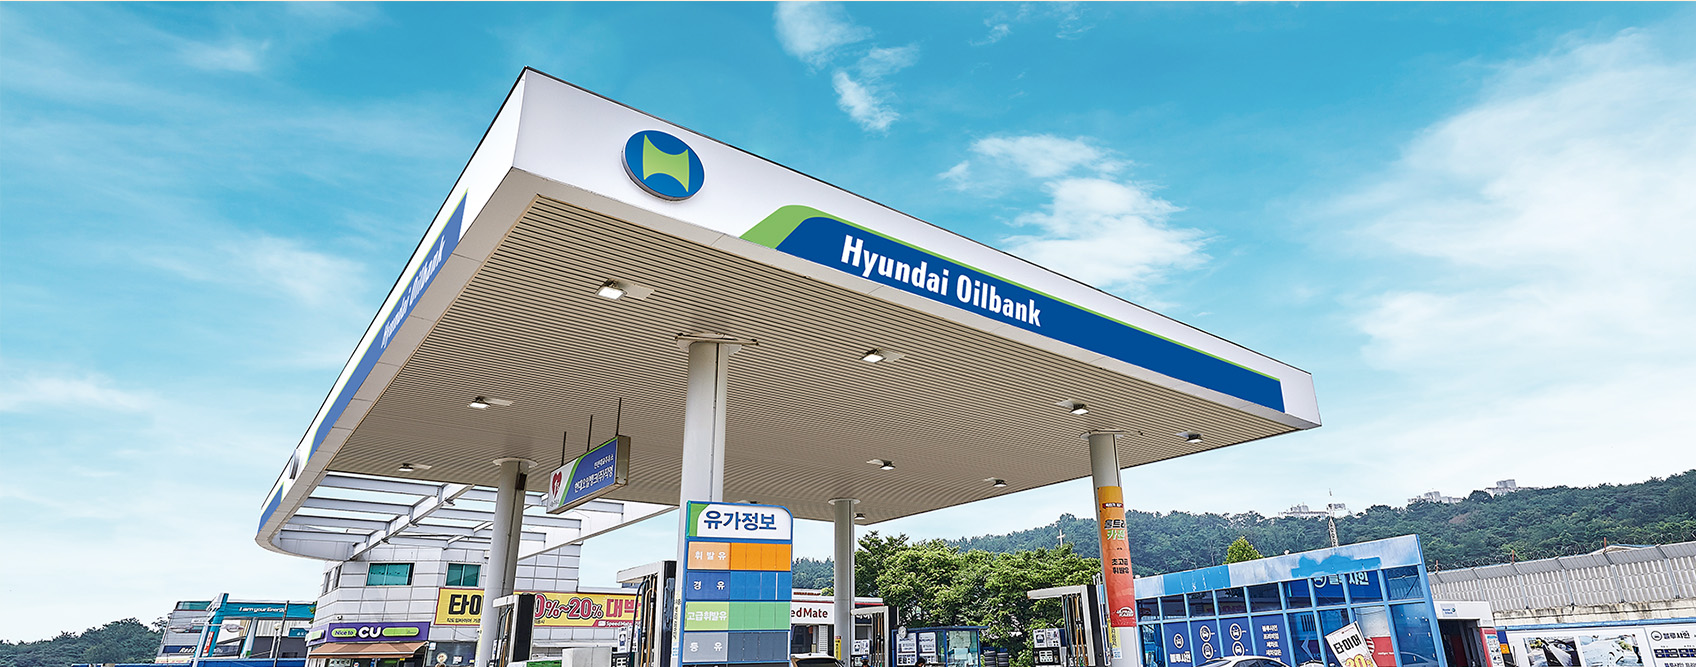 Hyundai Oilbank Built Media Hub Platform